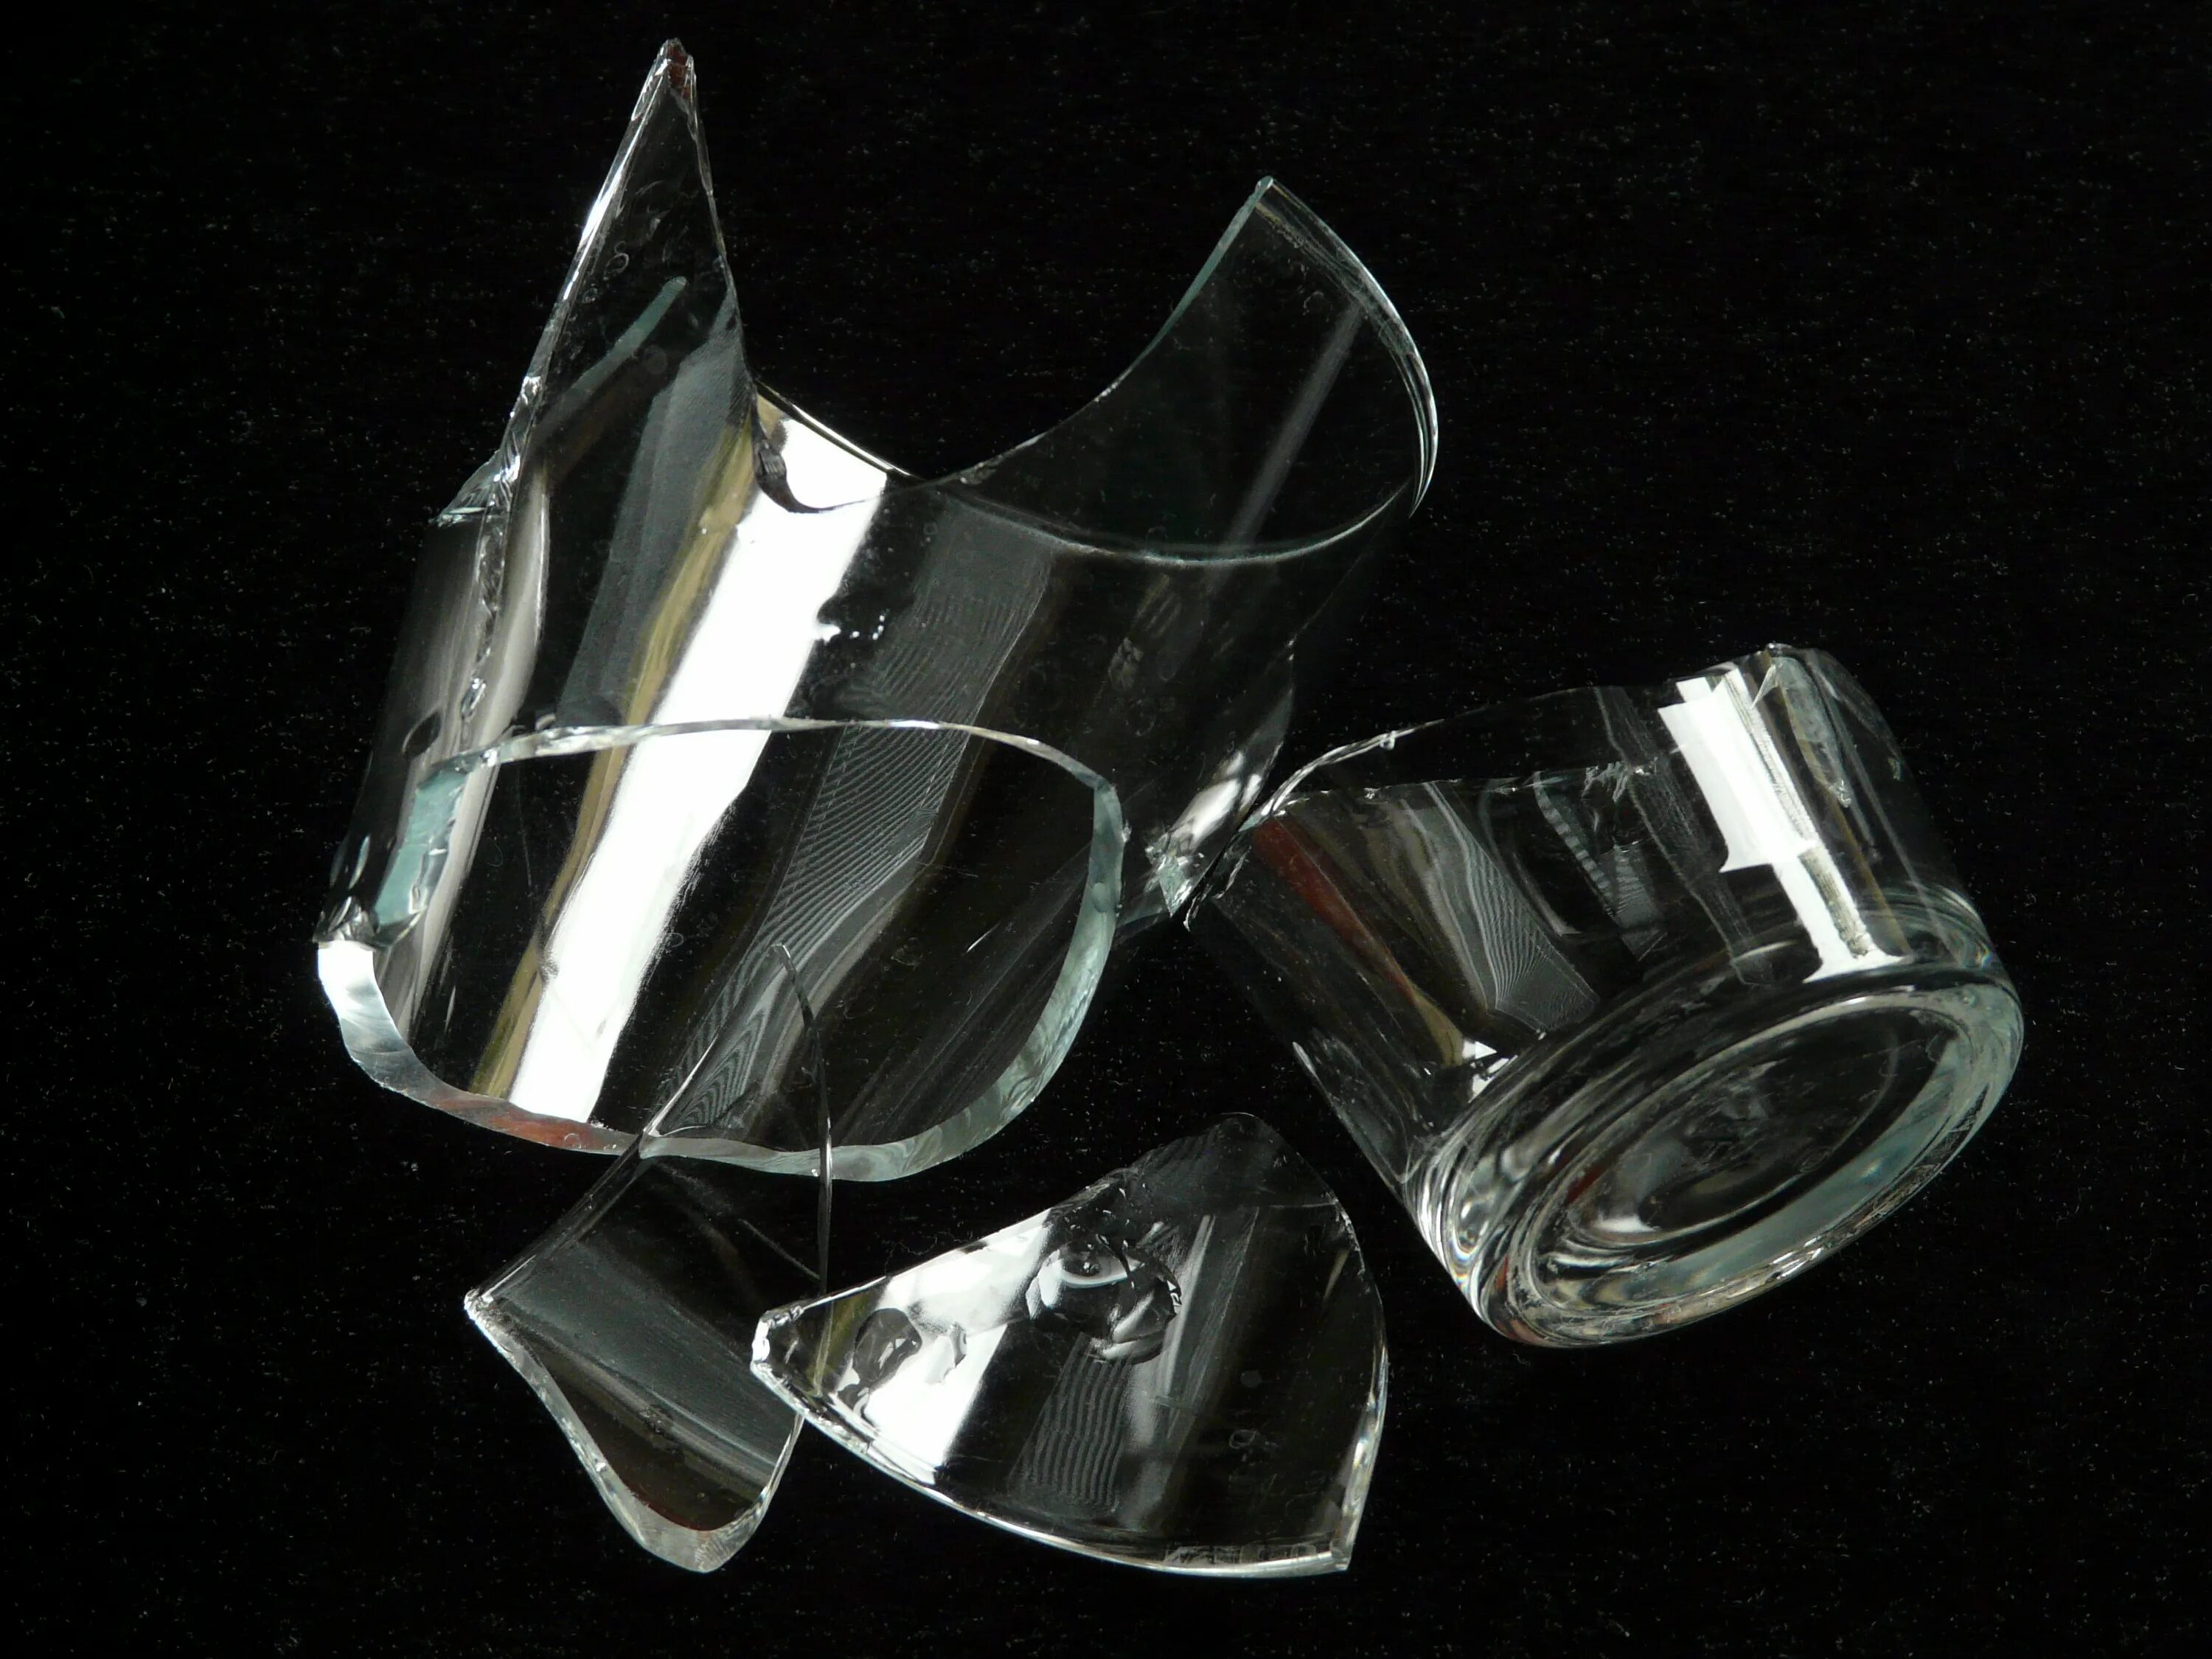 Разбилась стеклянный стакан. Разбитая стеклянная посуда. Разбитые стаканы. Разбитый стеклянный стакан. Стакан лопнул.